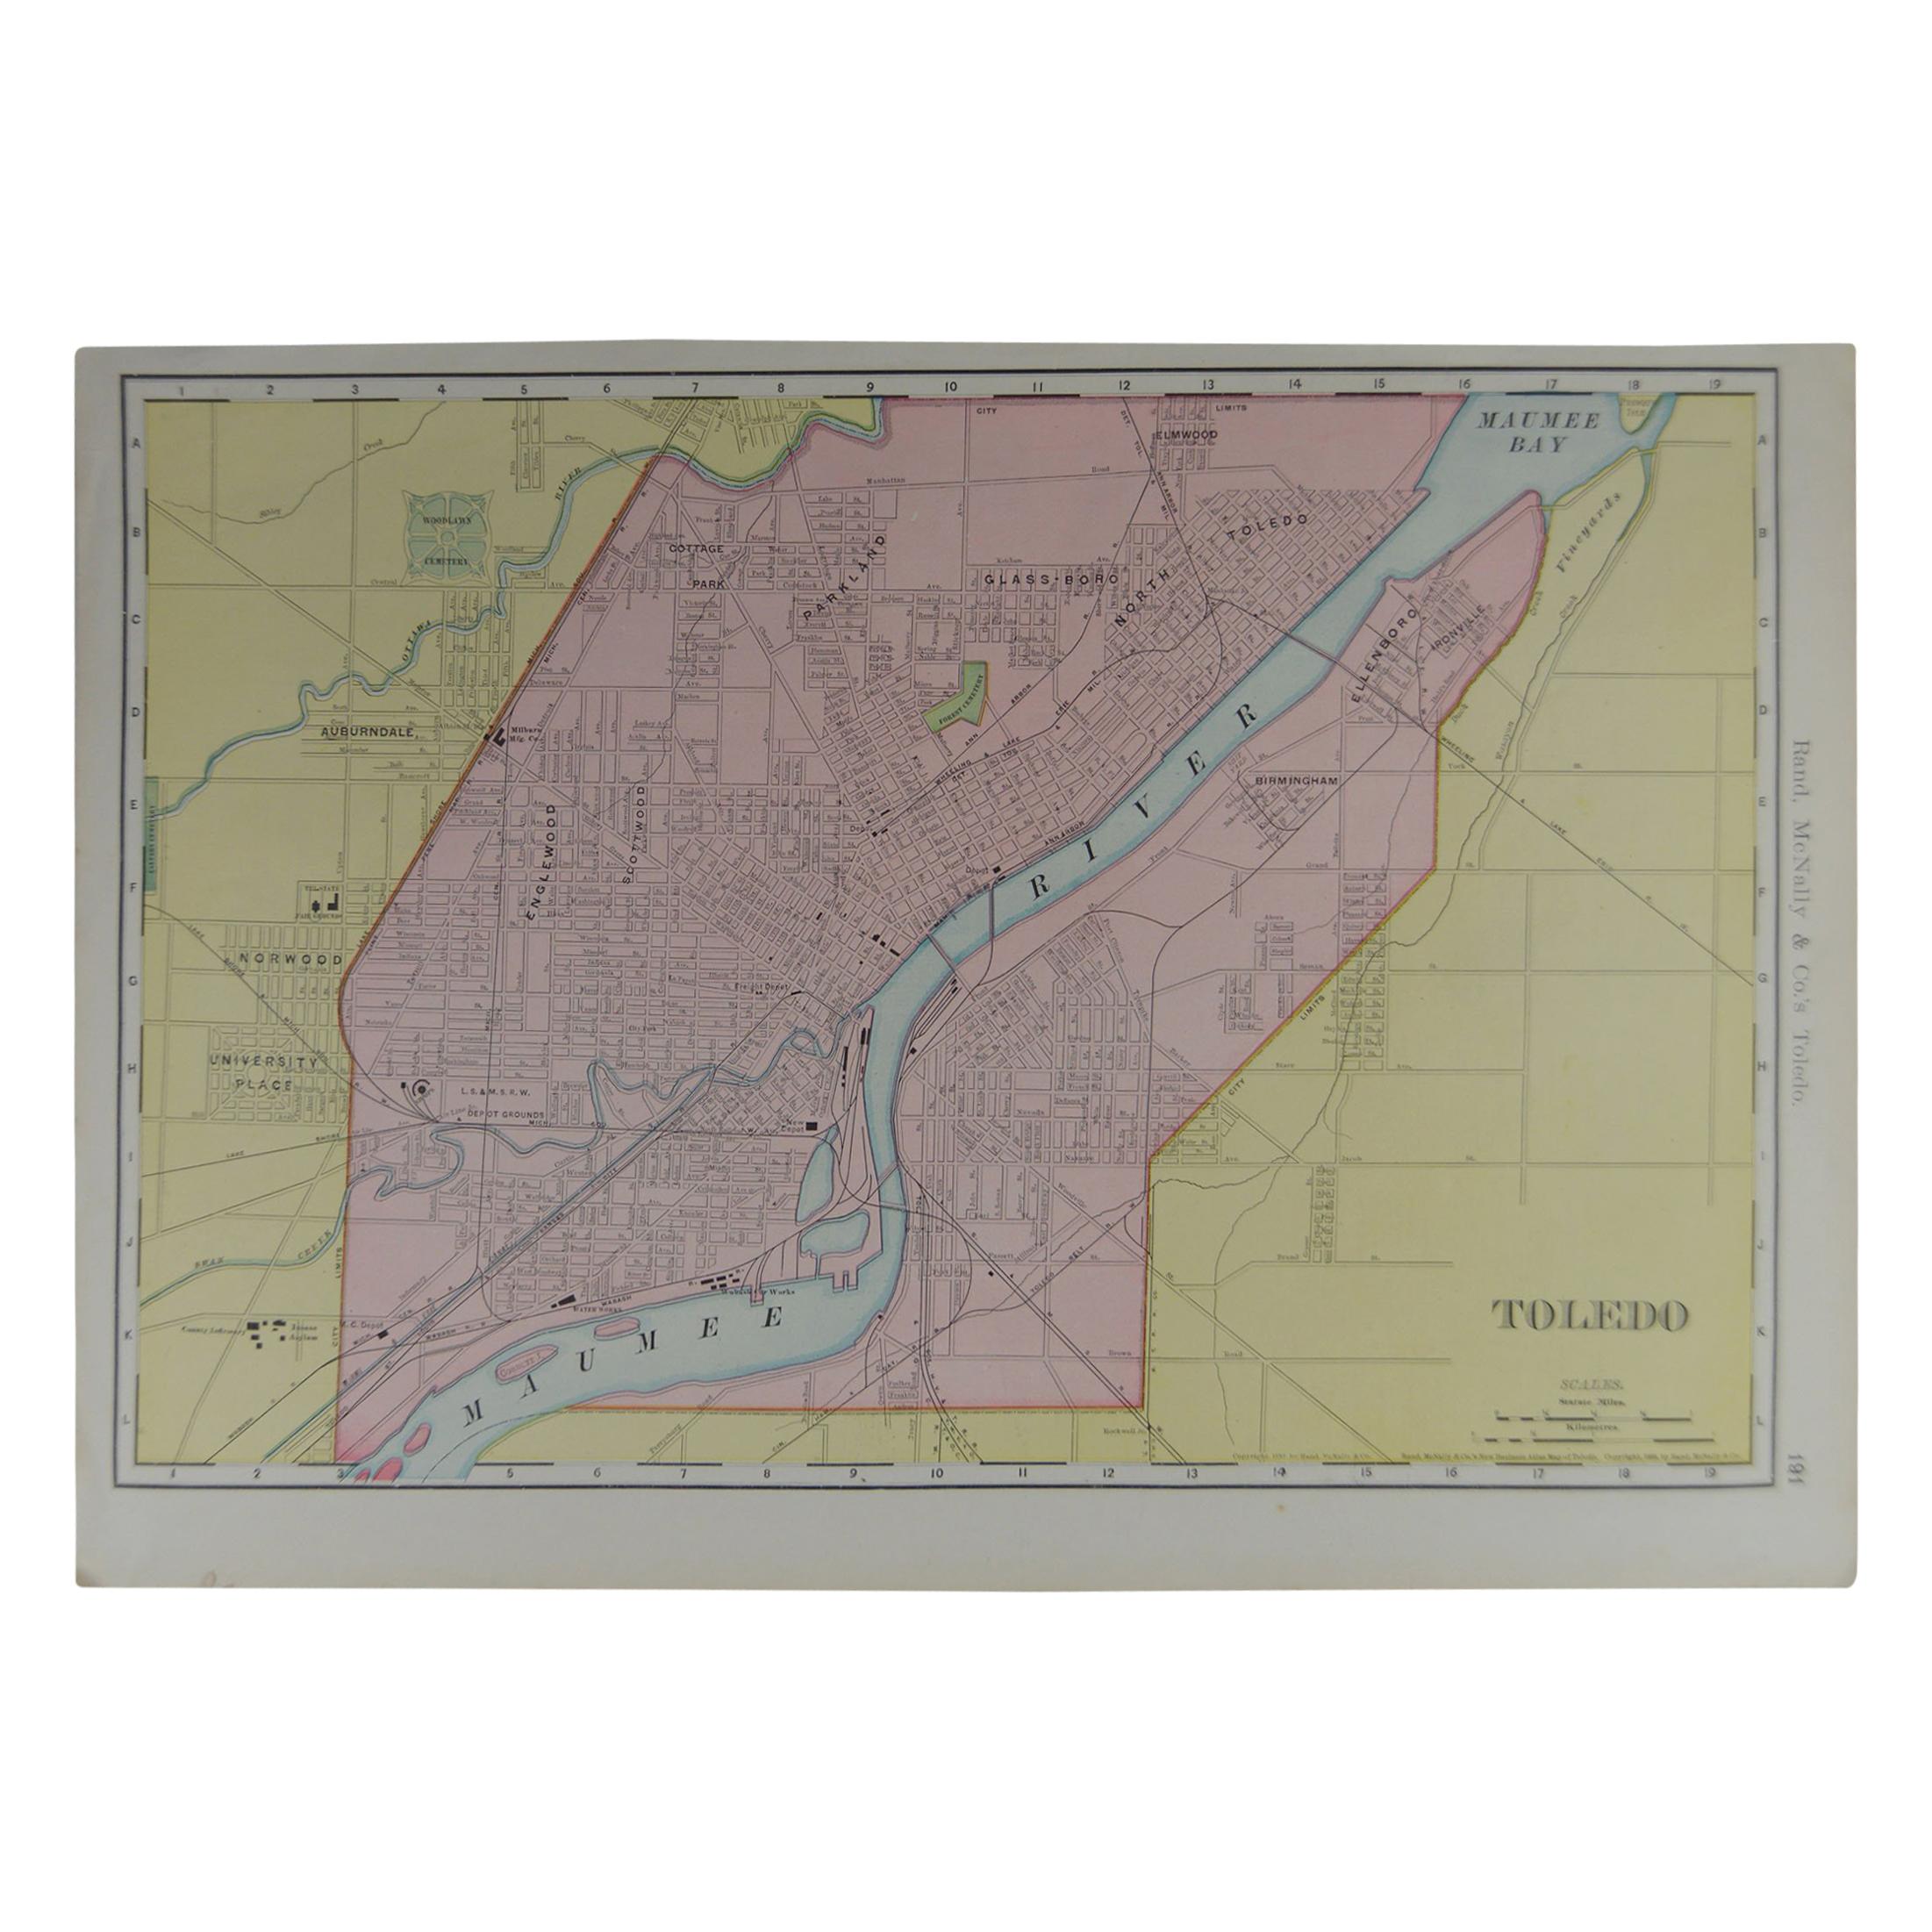 Original Antique City Plan of Toledo, Ohio USA, circa 1900